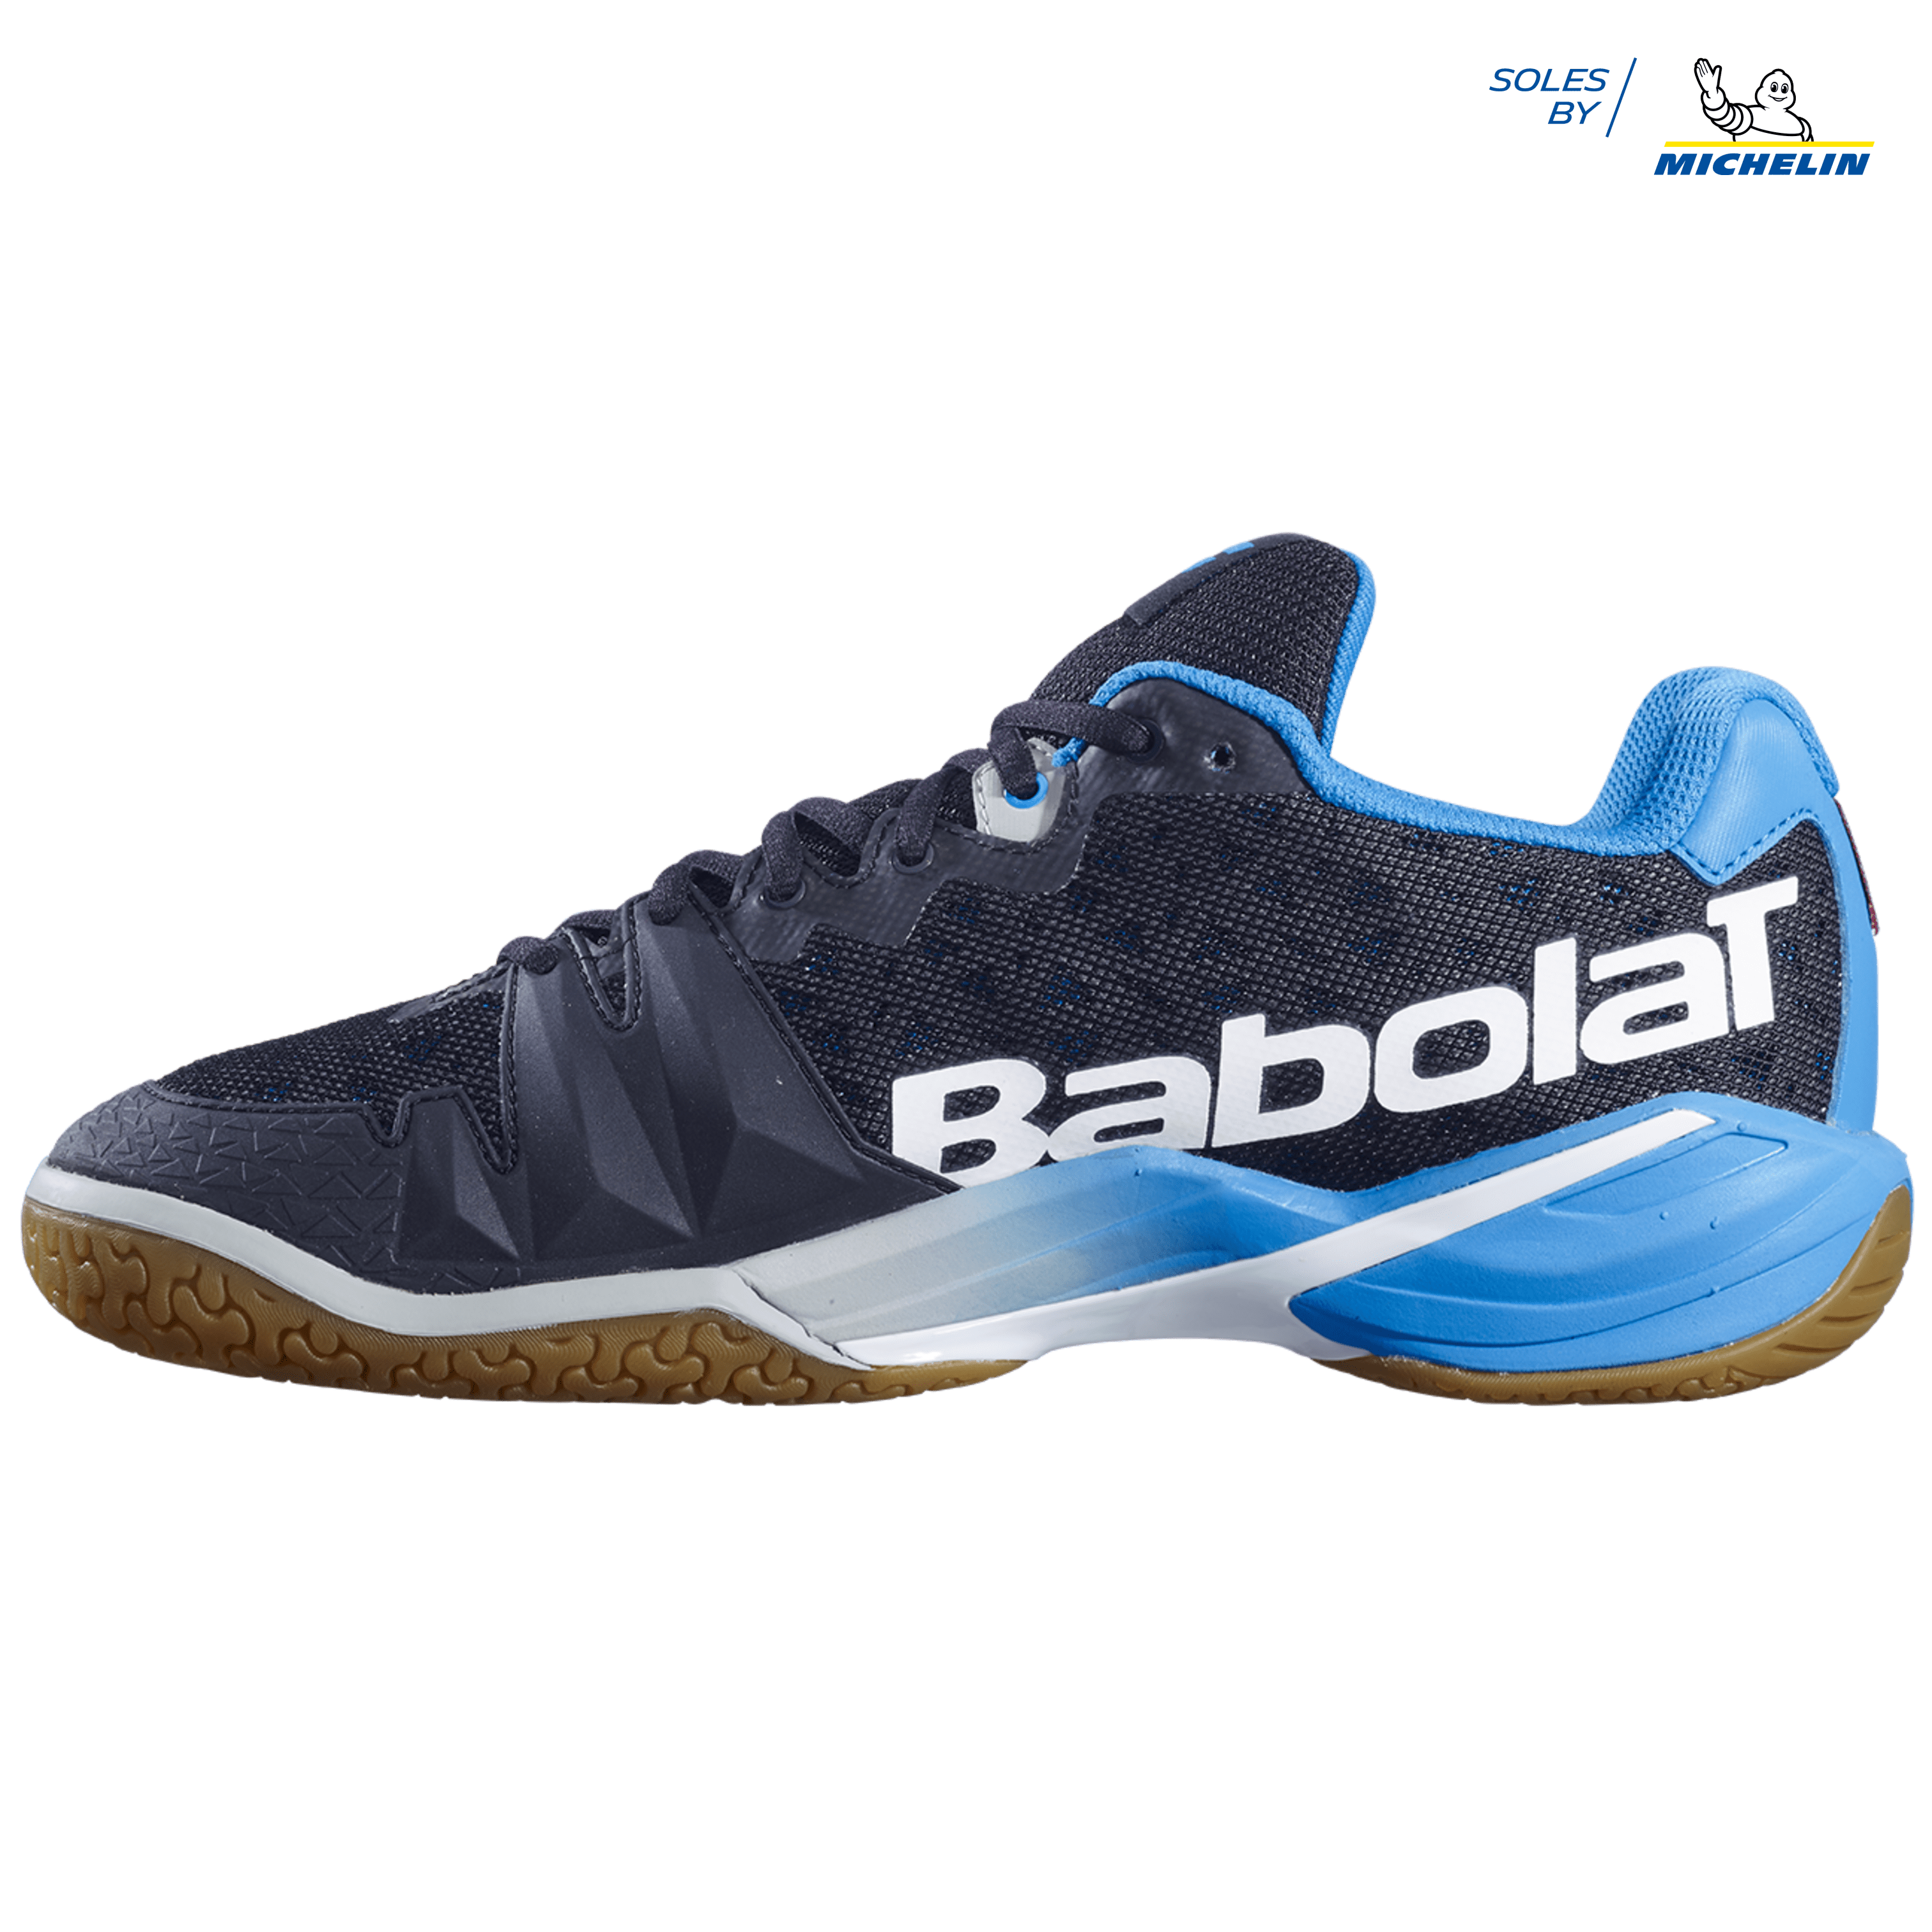 Babolat Shadow Tour Schuhe Badminton Squash Hallenschuhe Indoor blau 30S1801 175 